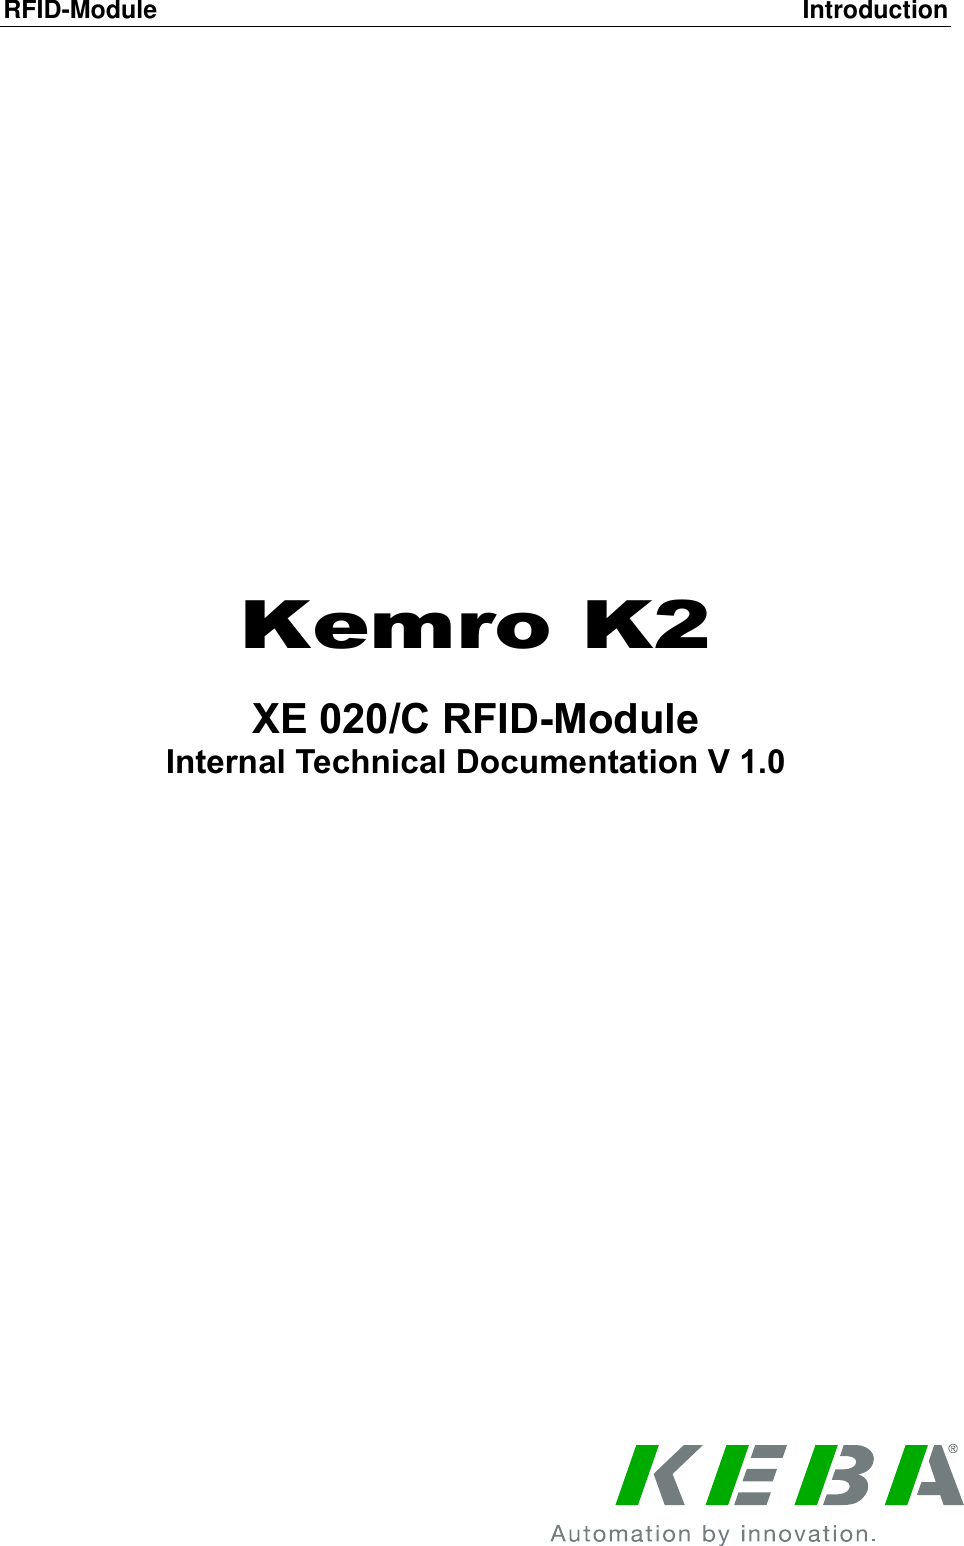 RFID-Module  Introduction                  Kemro K2  XE 020/C RFID-Module Internal Technical Documentation V 1.0     